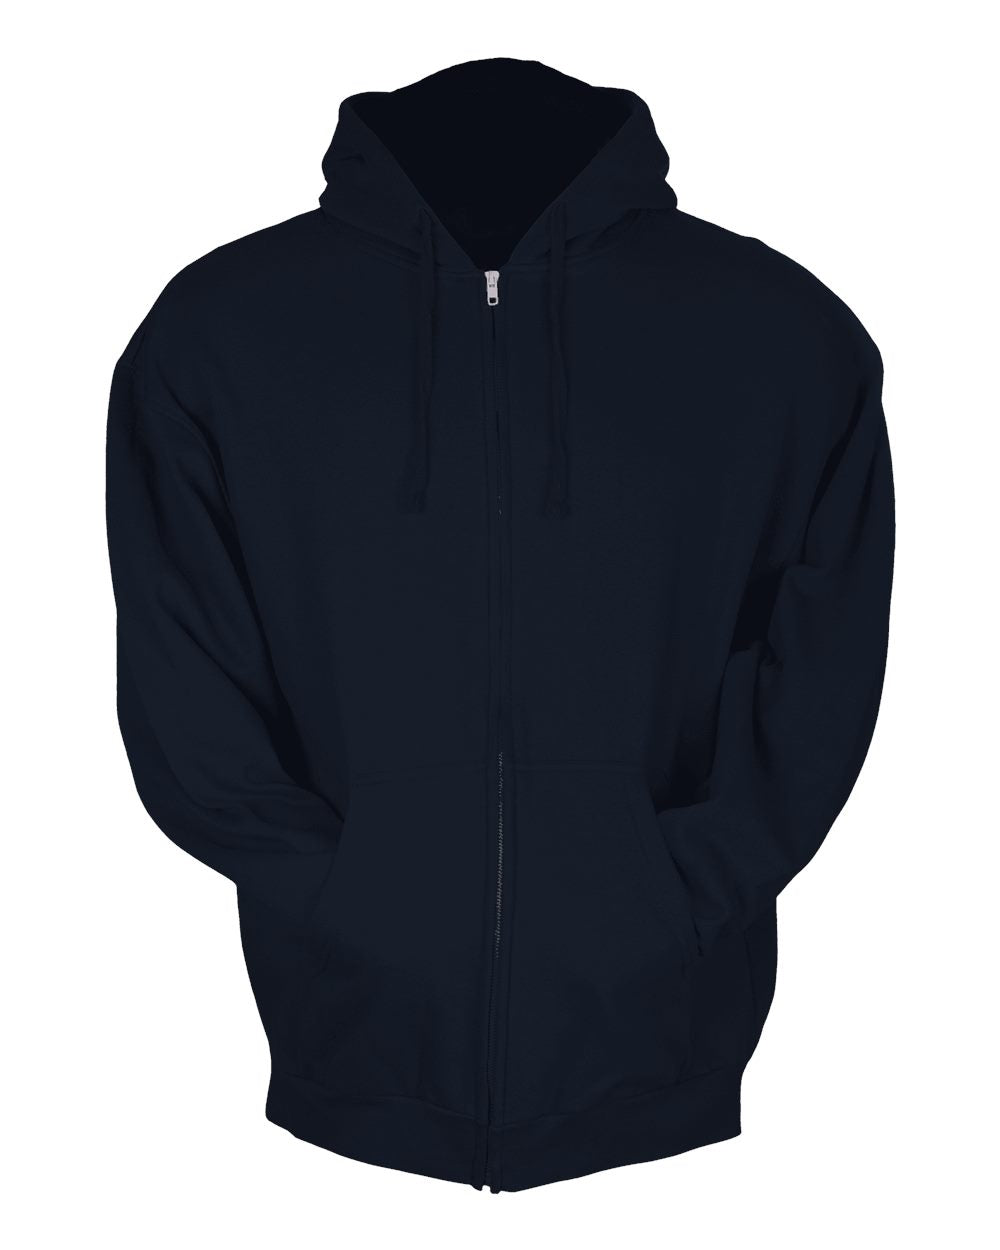 Tultex 331 - Unisex Full-Zip Hooded Sweatshirt